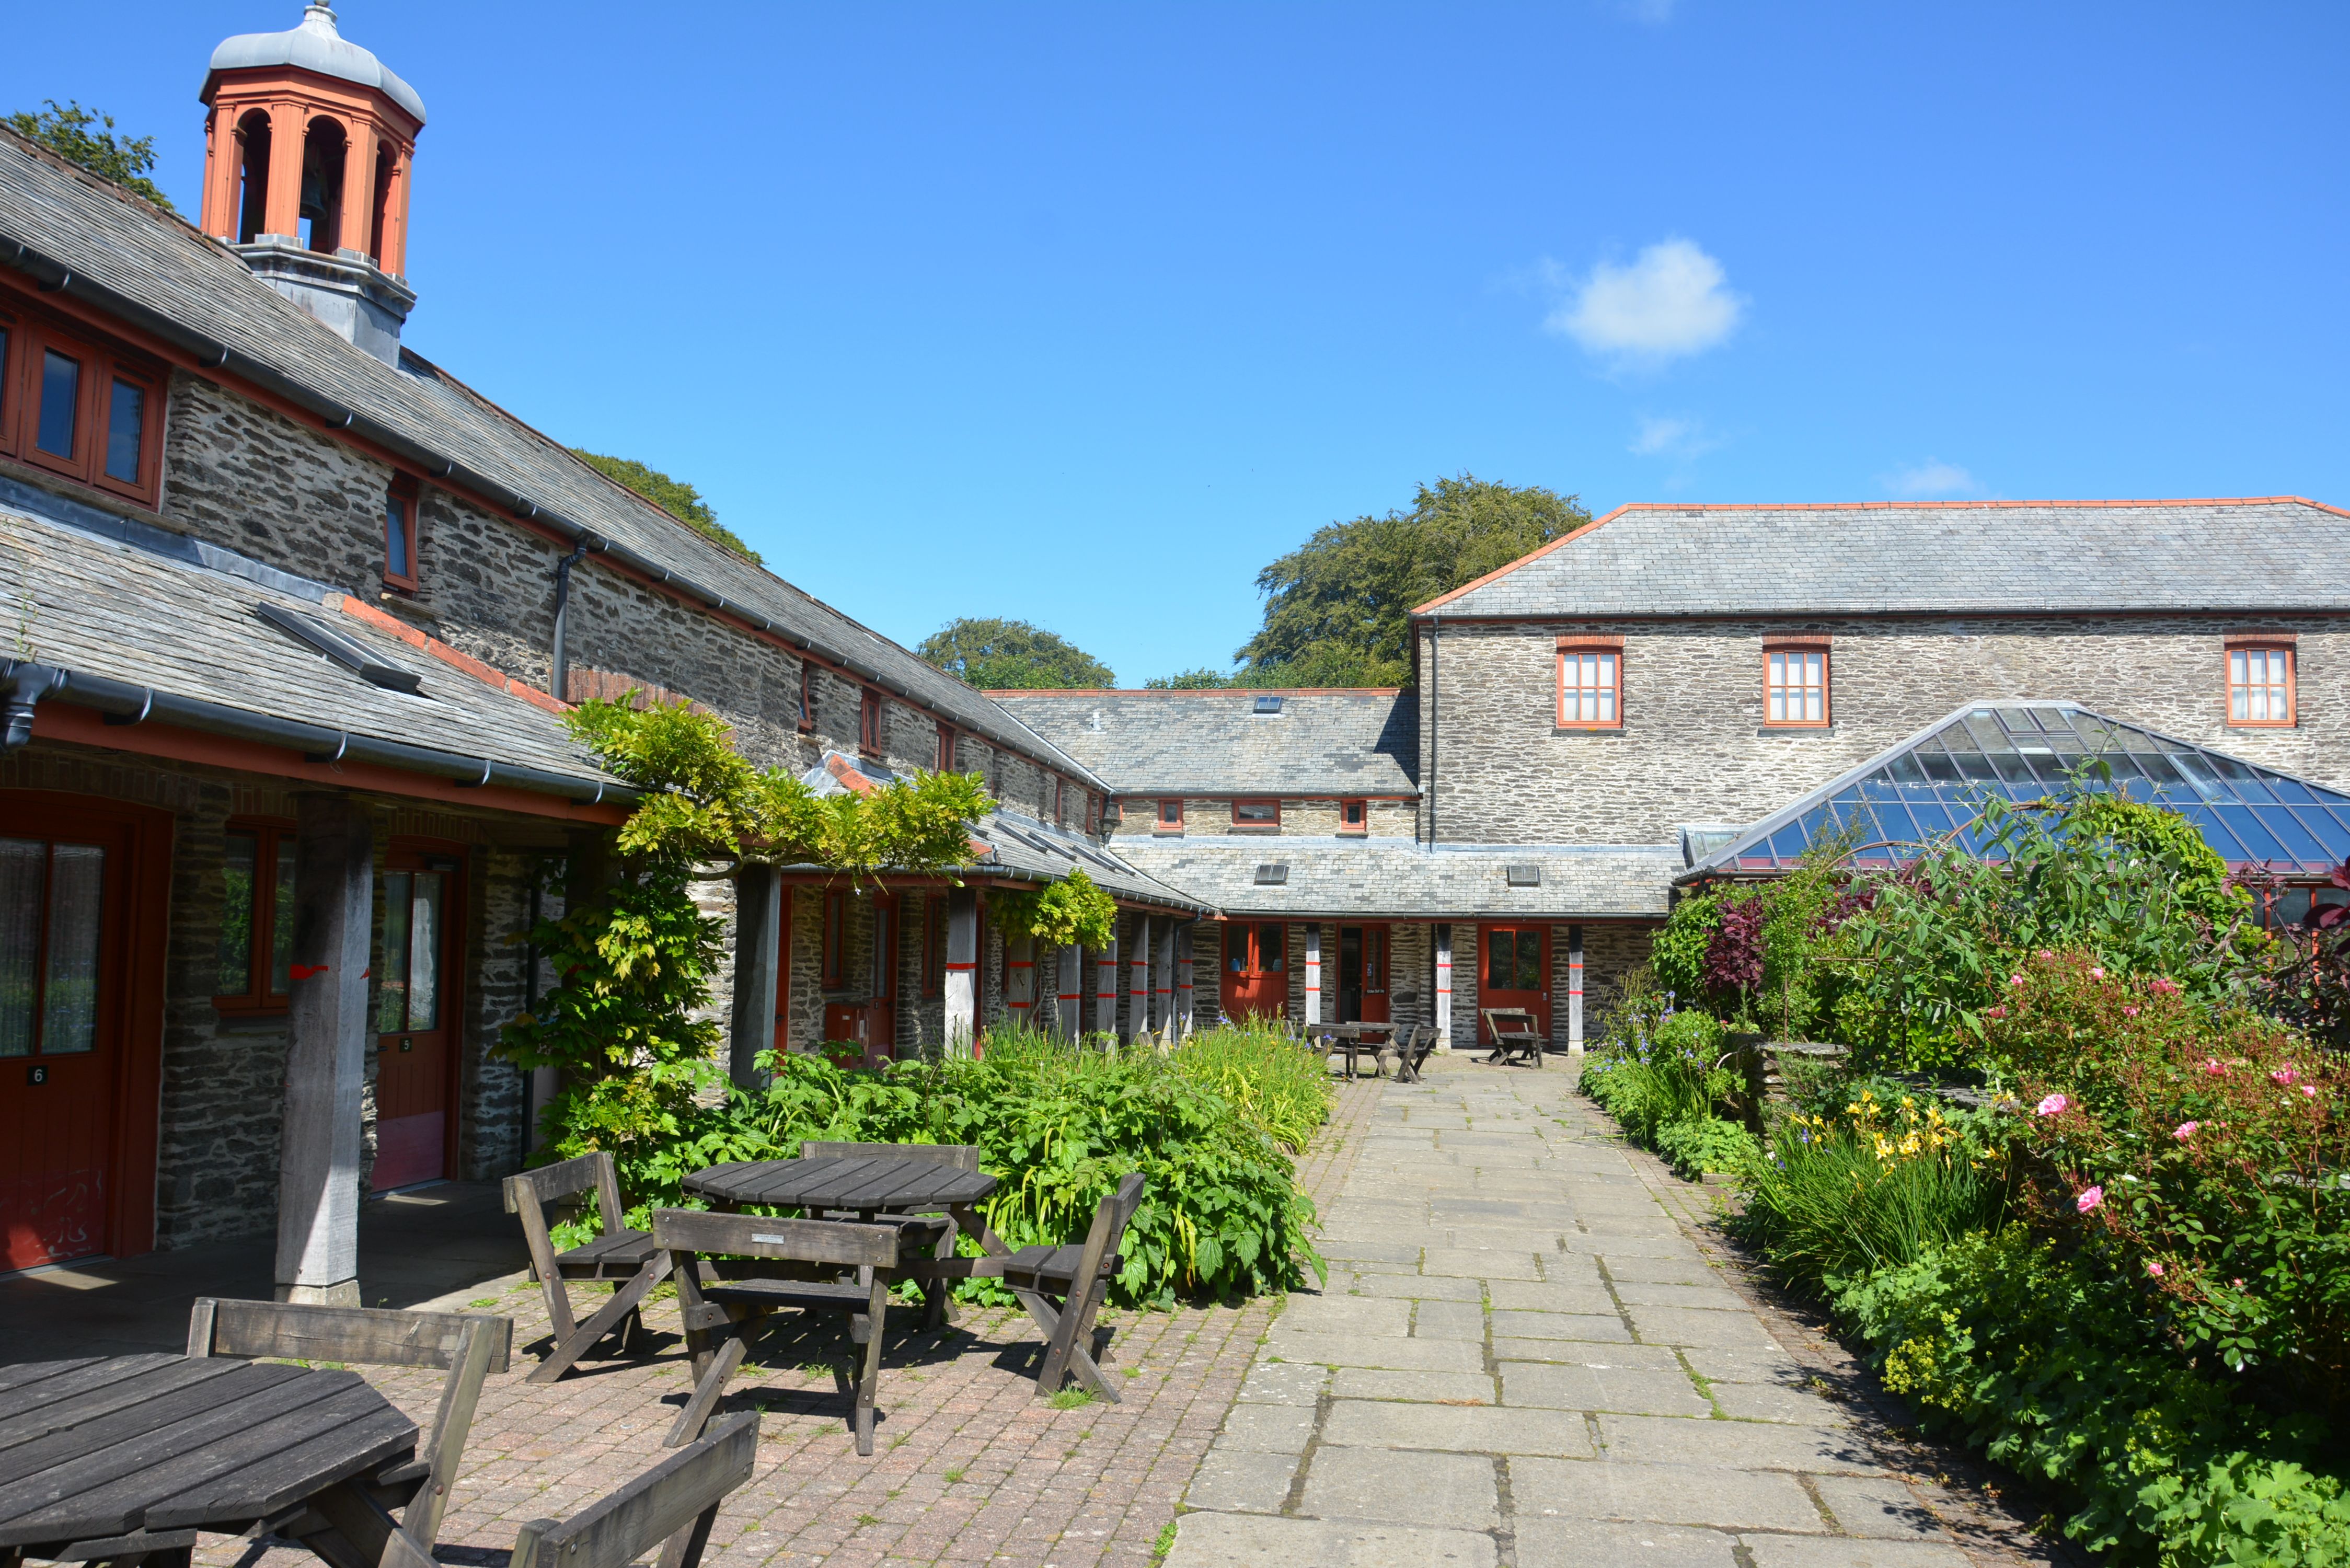 A view of the courtyard at Calvert Trust Exmoor